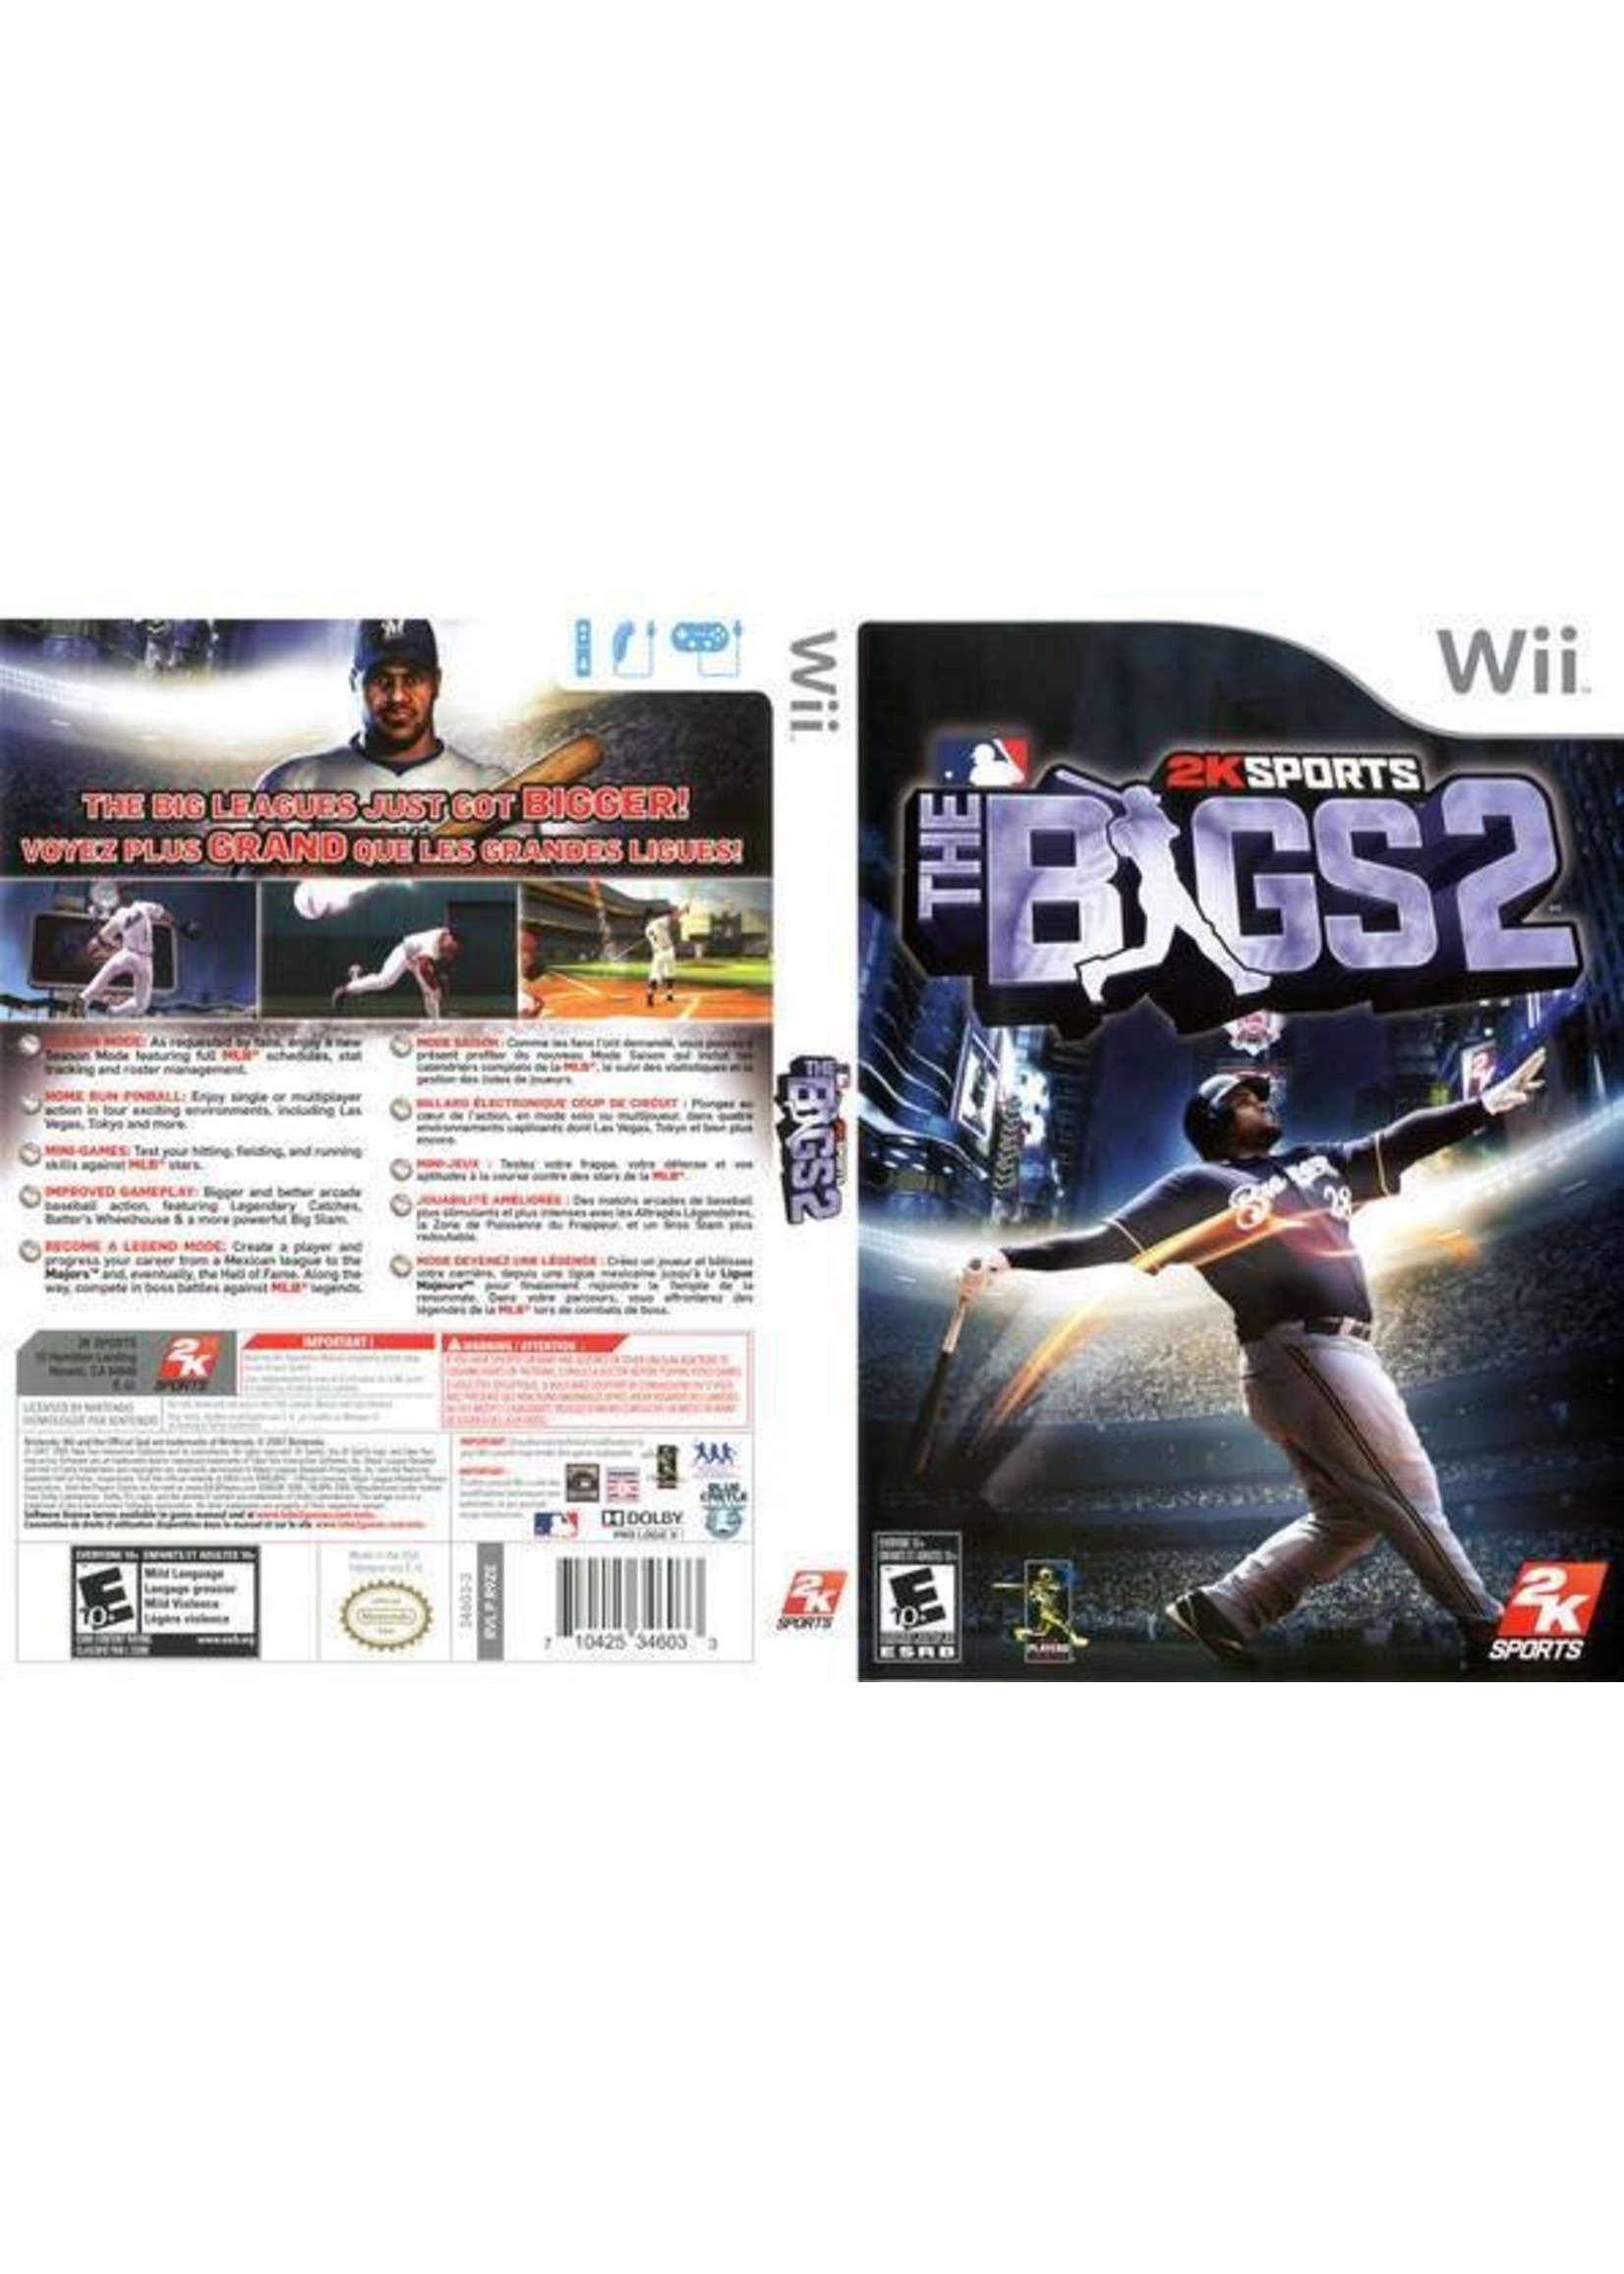 Nintendo Wii Bigs 2, The